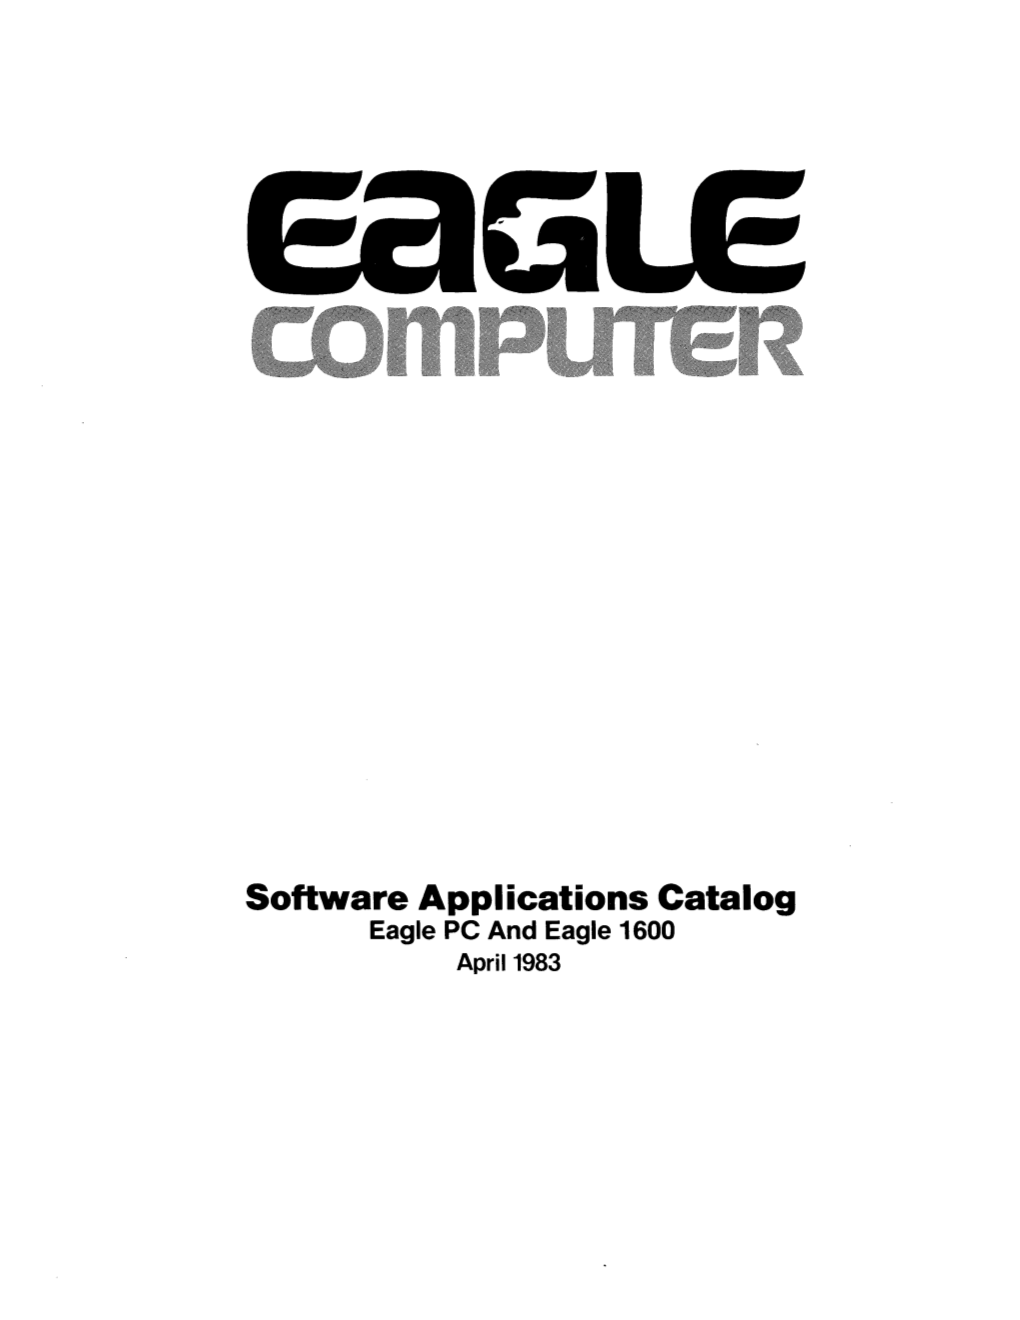 Software Applications Catalog Eagle PC and Eagle 1600 April 1983